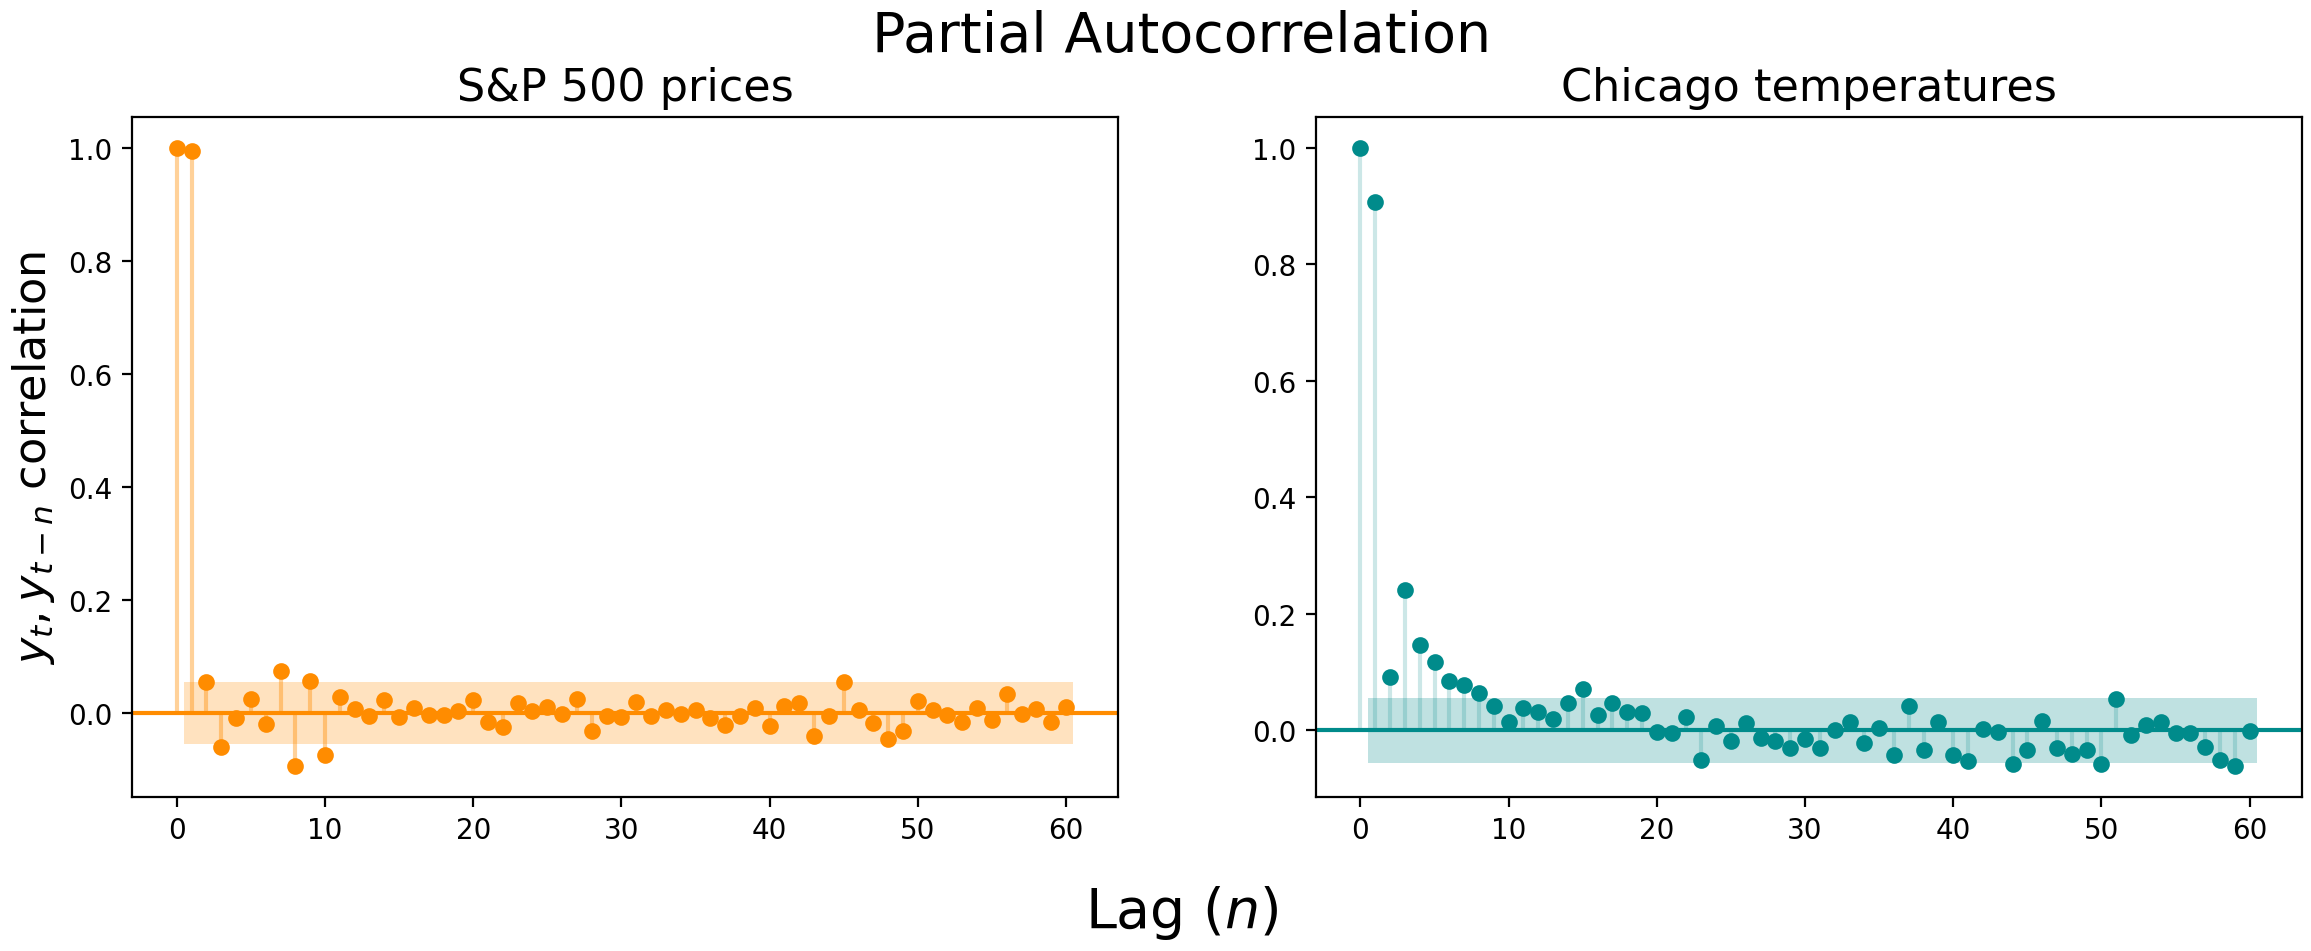 Examples of partial autocorrelation plots